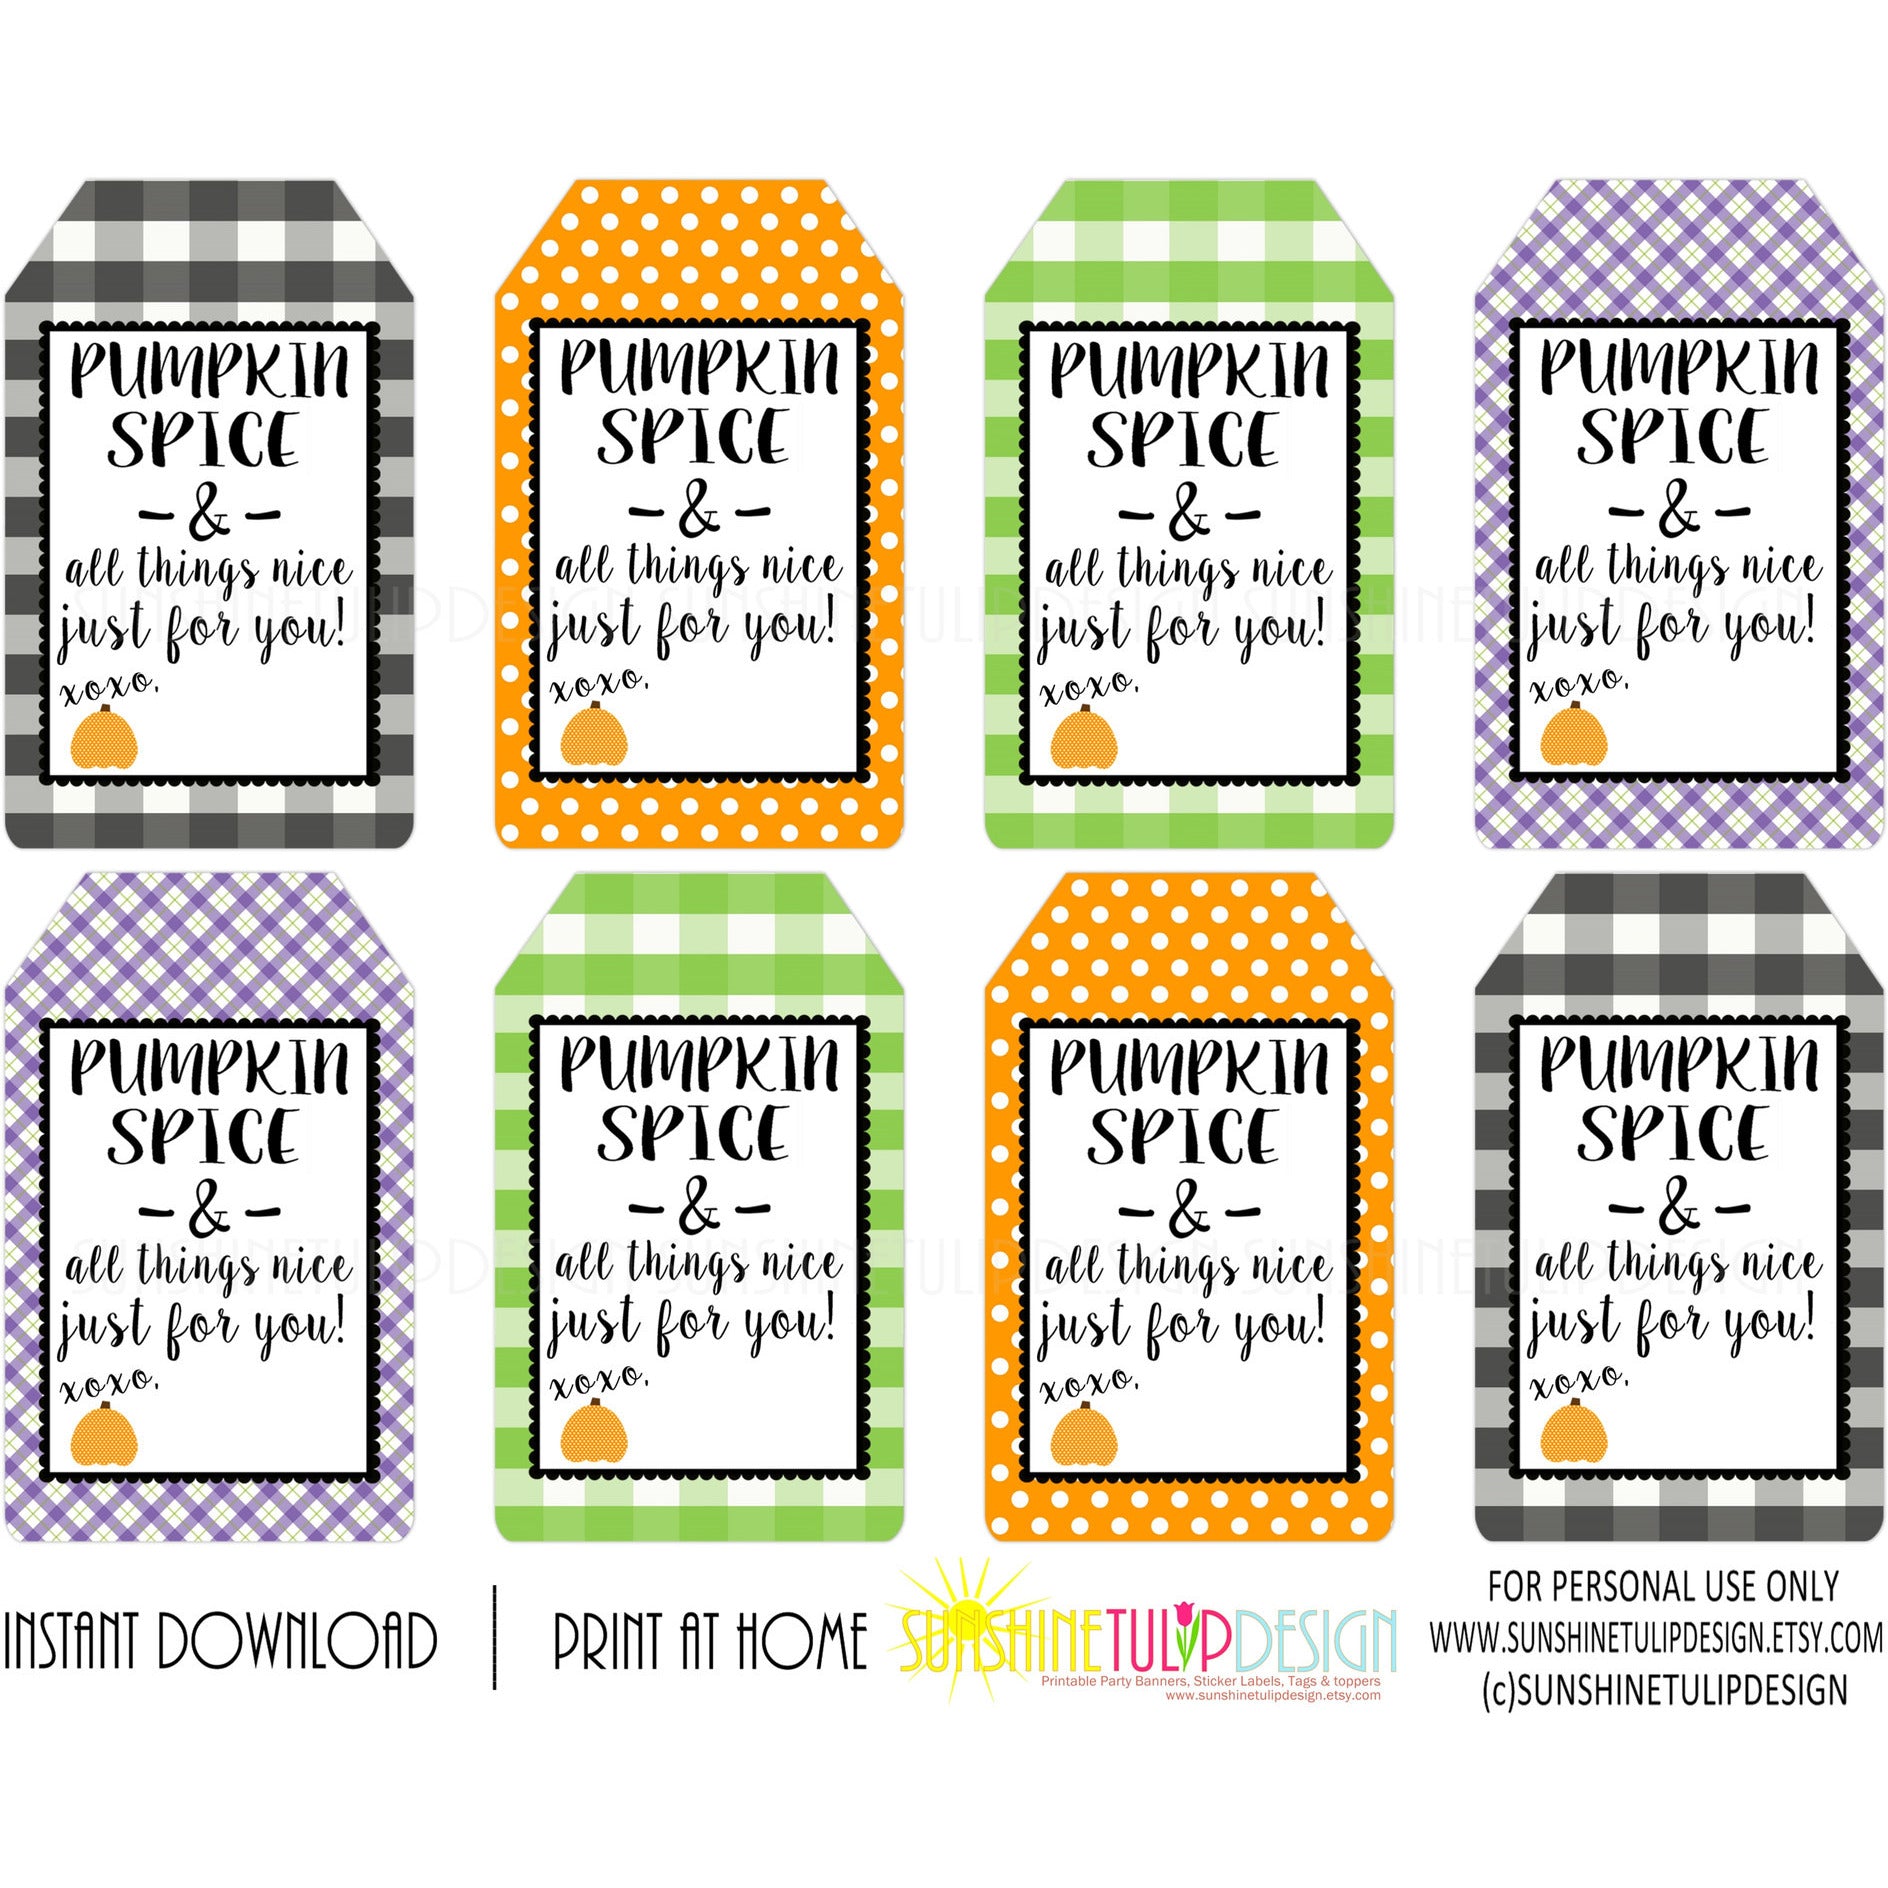 pumpkin-spice-everything-nice-tags-printable-teacher-appreciation-h-sunshinetulipdesign